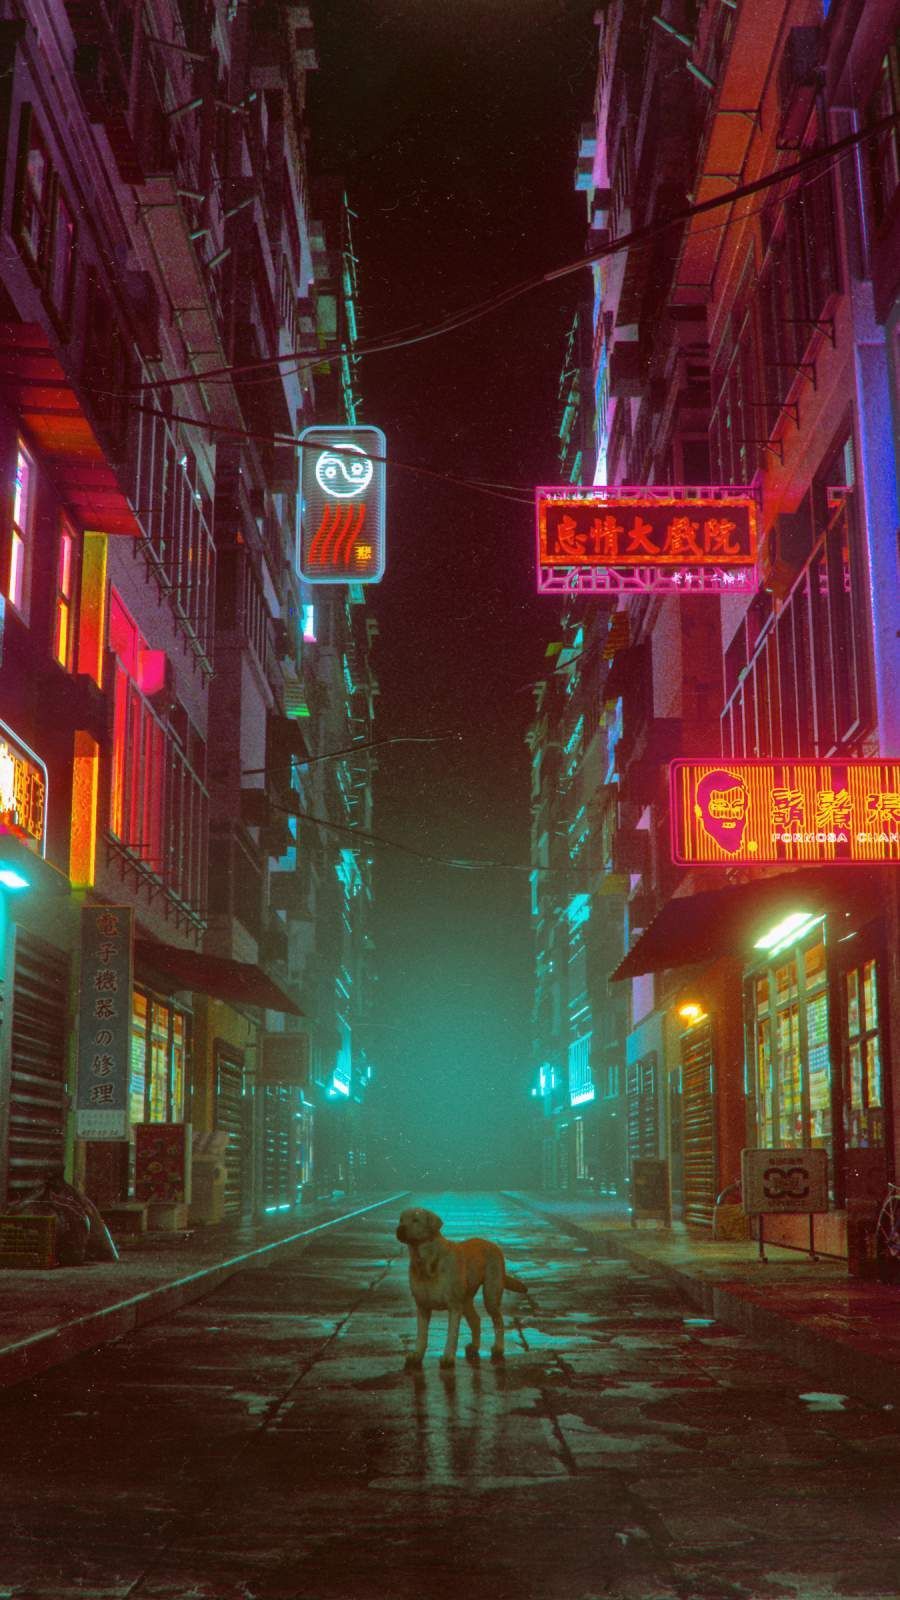 China Town iPhone Wallpaper. Cyberpunk city, Cyberpunk aesthetic, Dystopian future